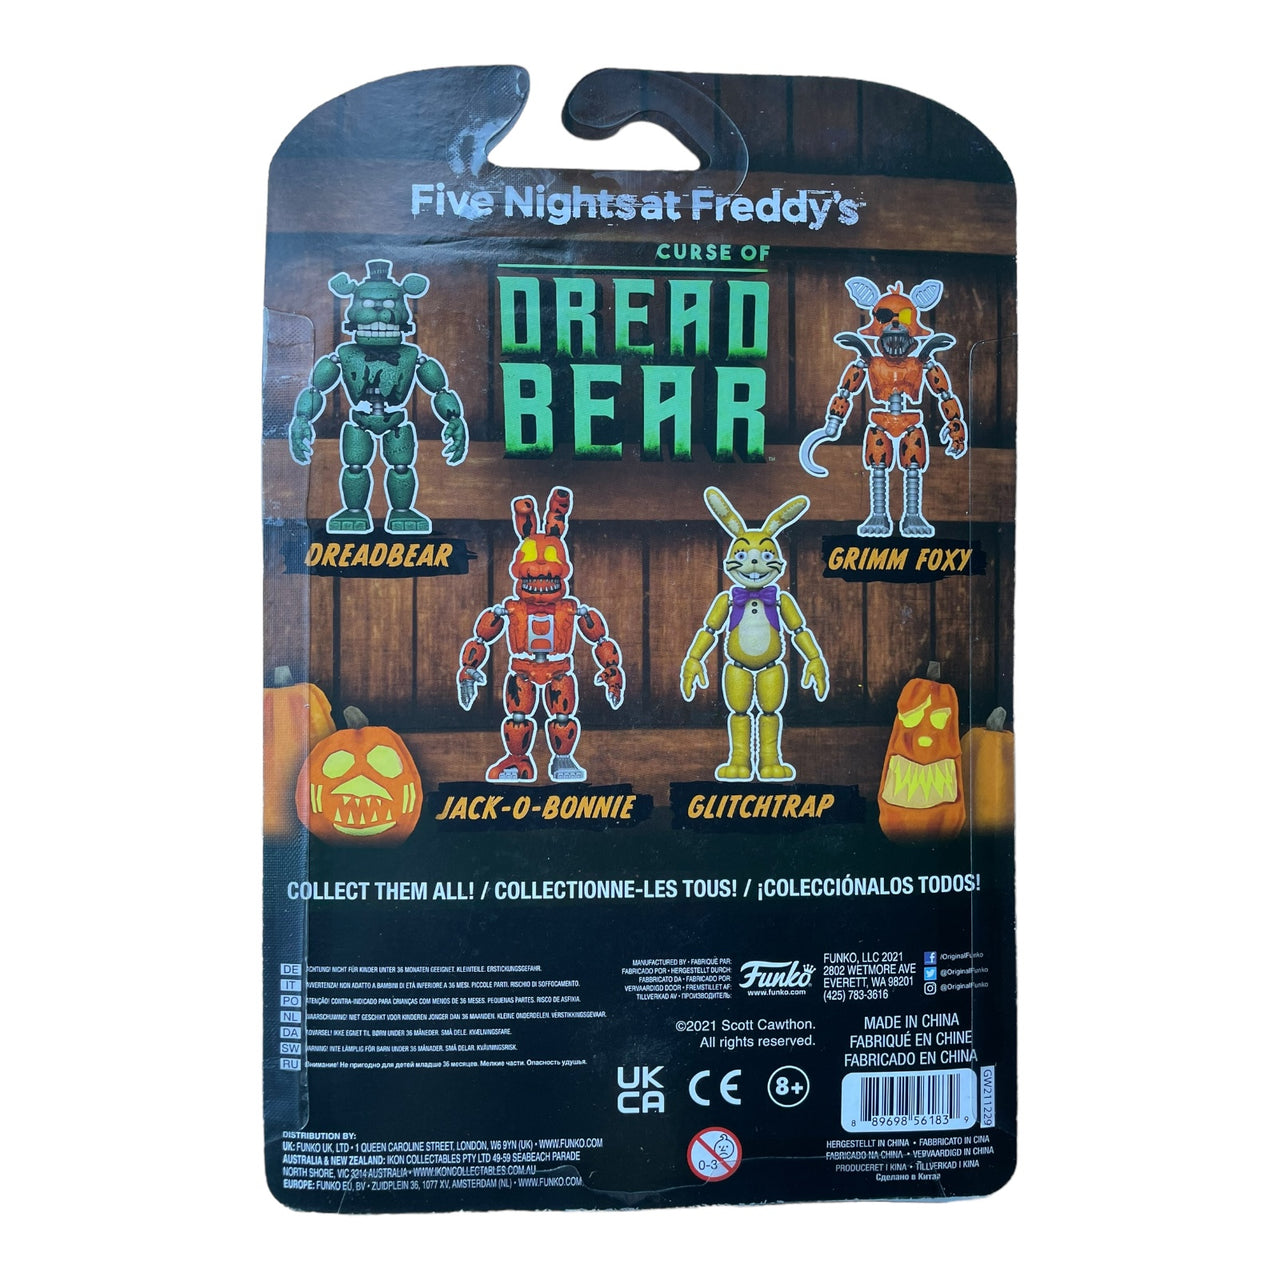 Five Nights at Freddy's Dread Bear Captain Foxy Action Figure Funko